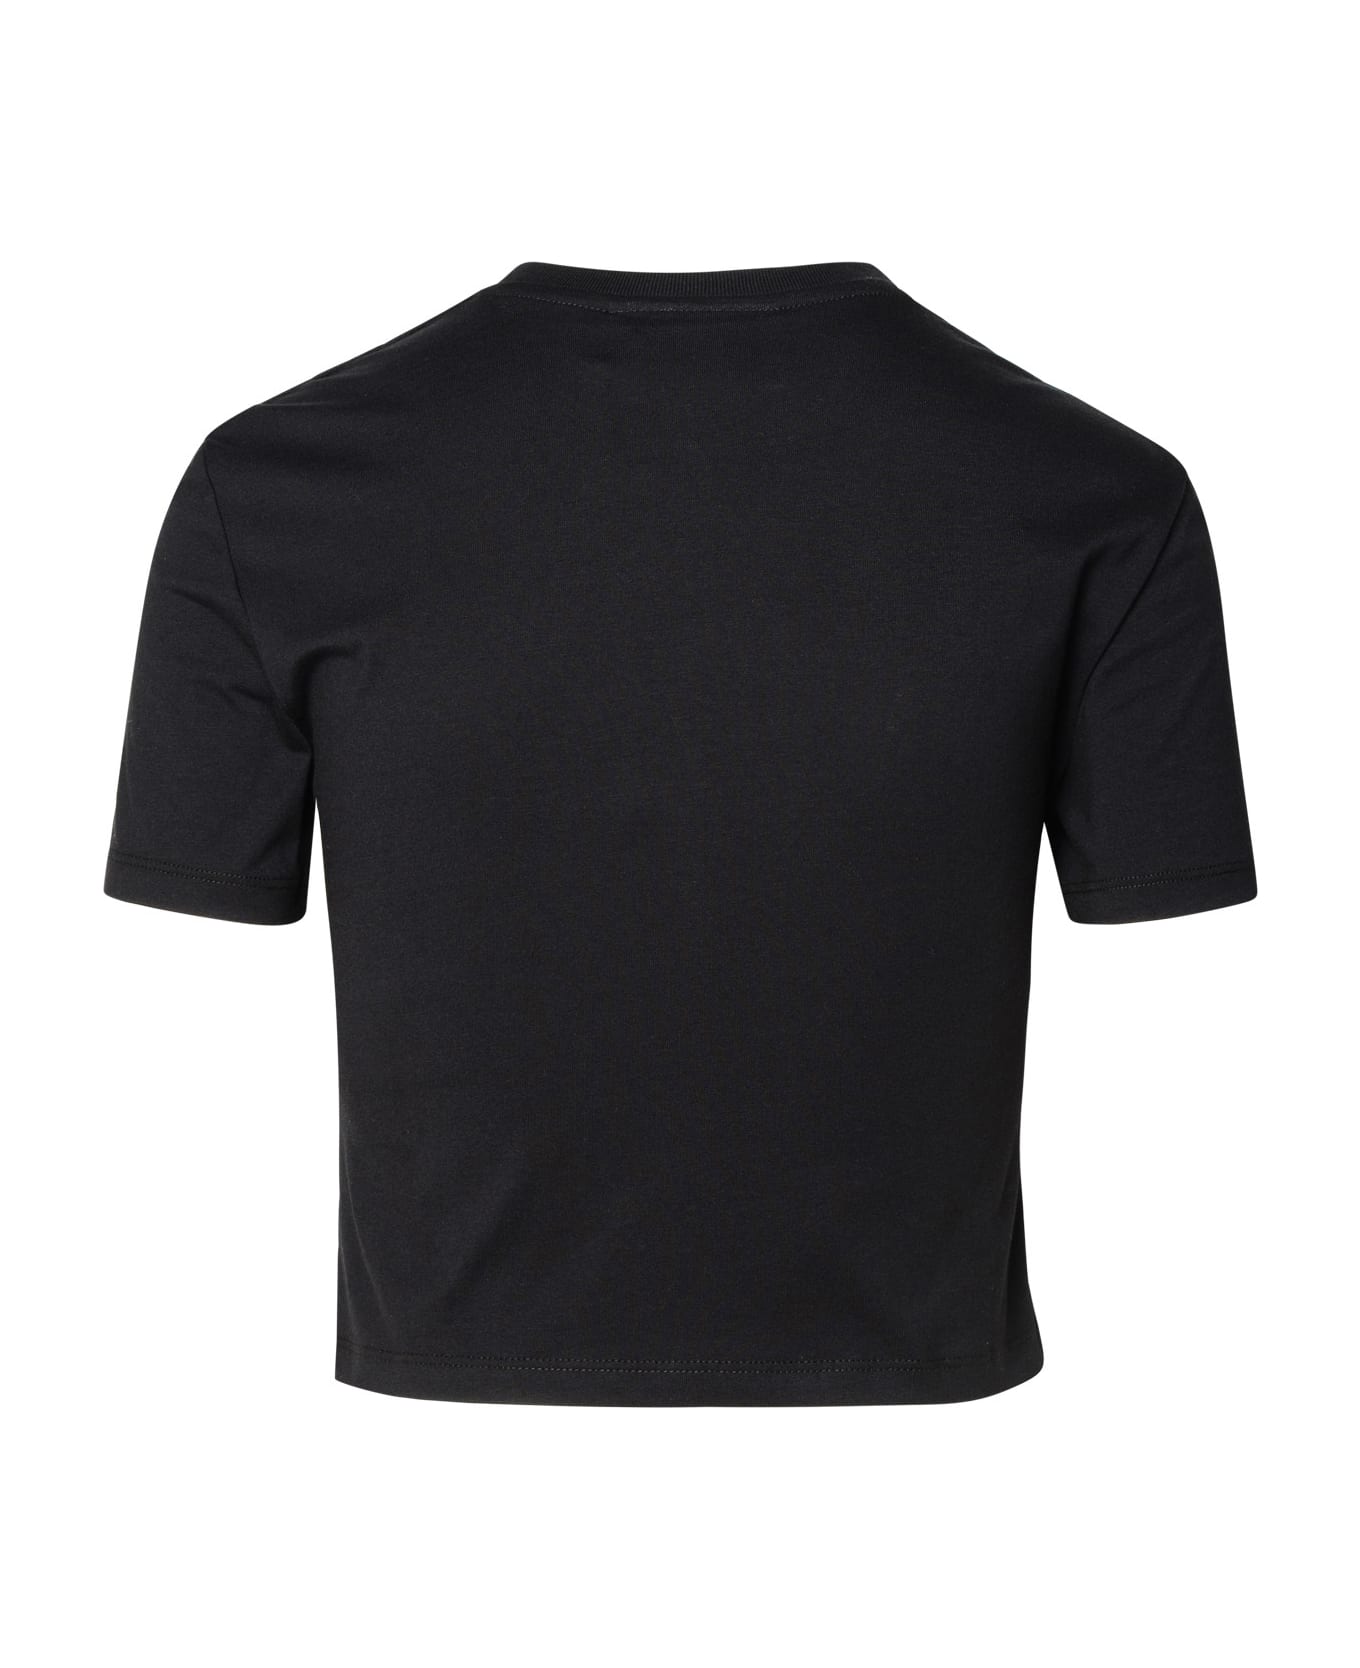 Chiara Ferragni Black Cotton T-shirt - Black Tシャツ